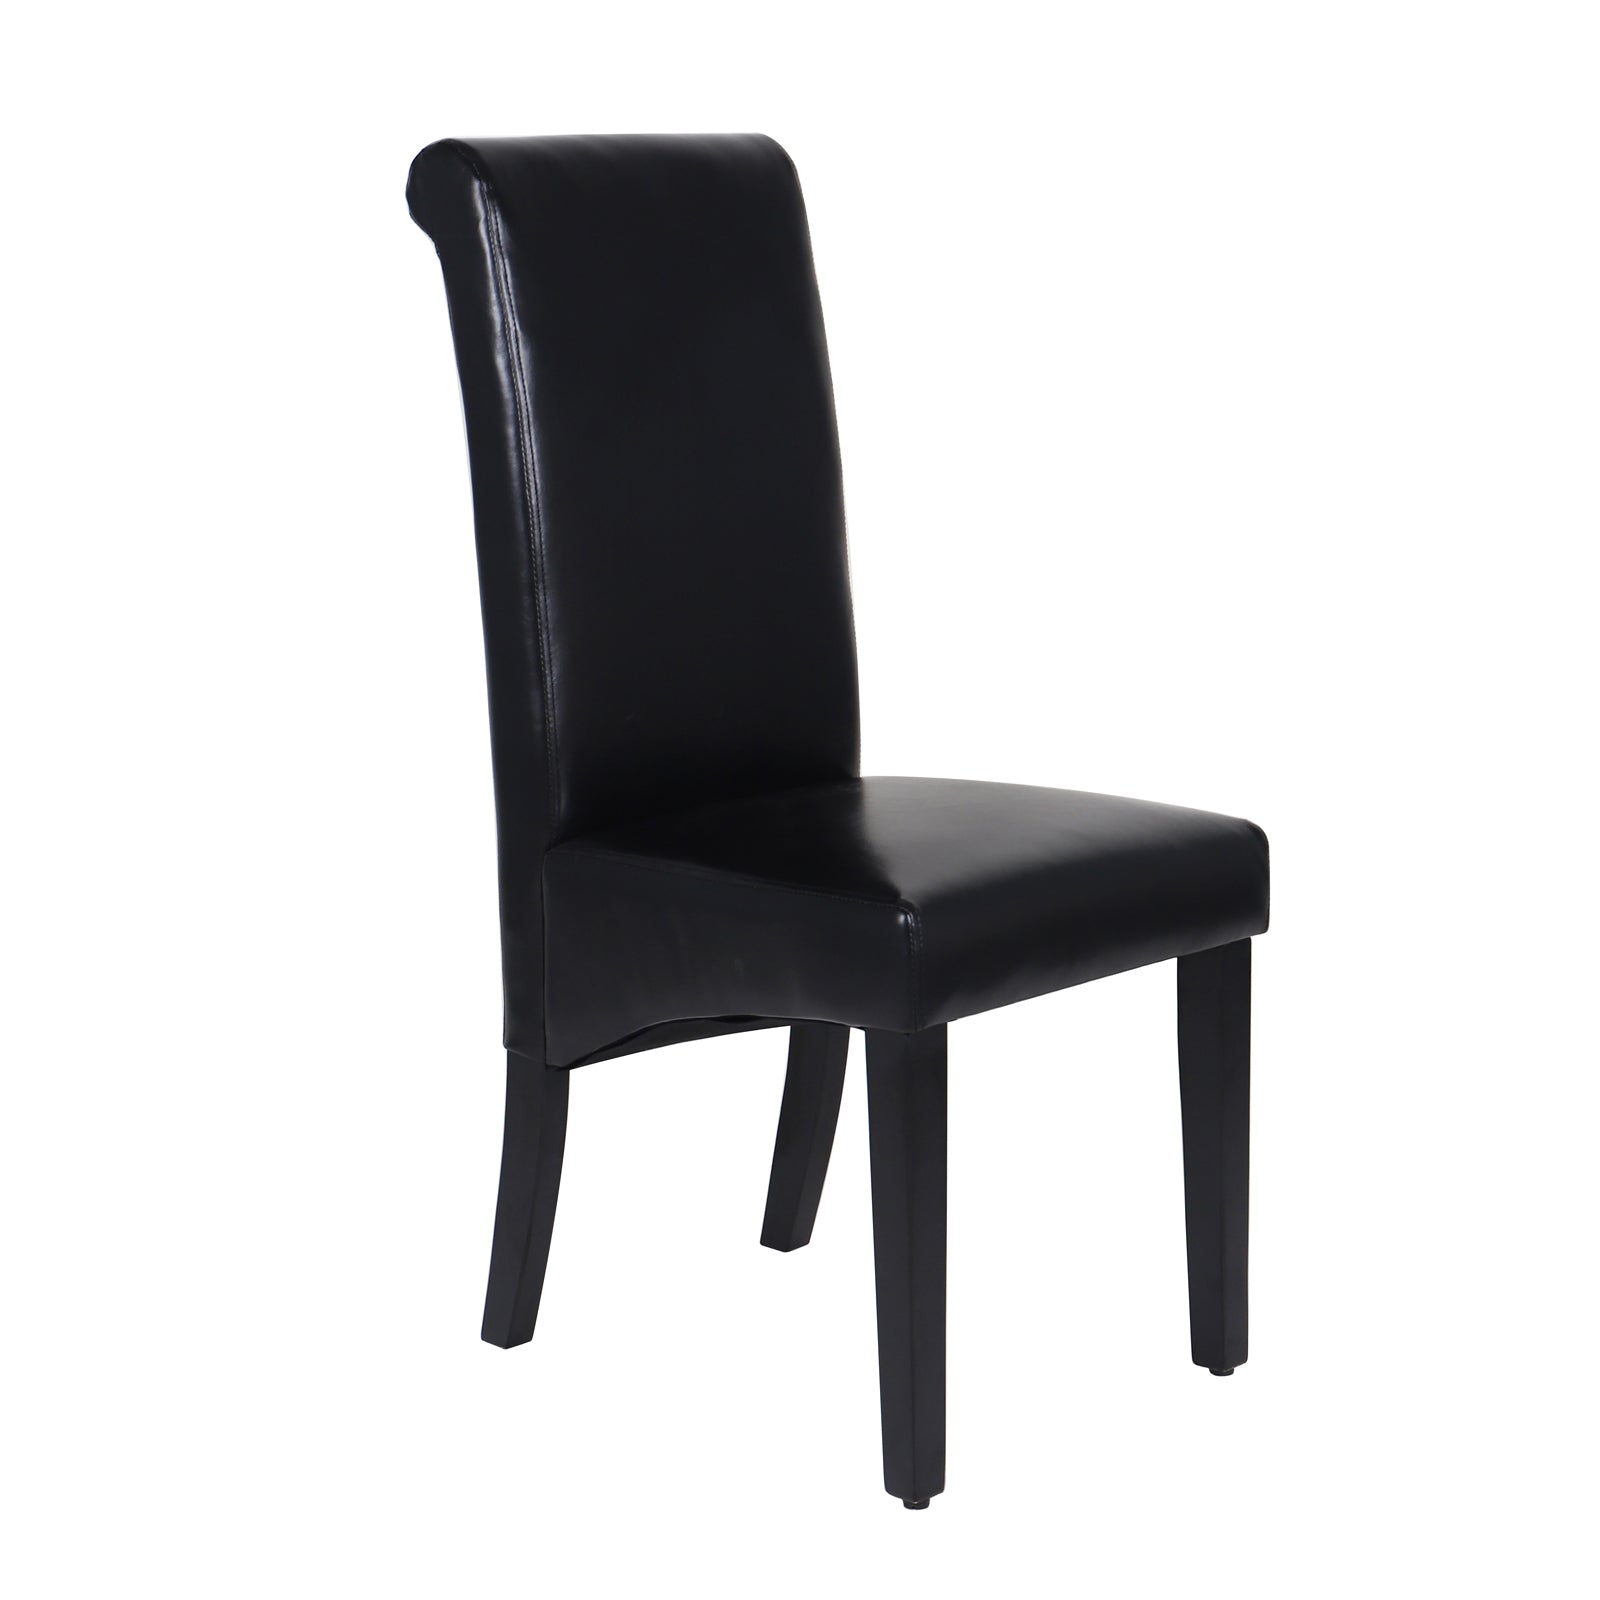 Swiss Wooden Dining Chairs Black 2x - Newstart Furniture